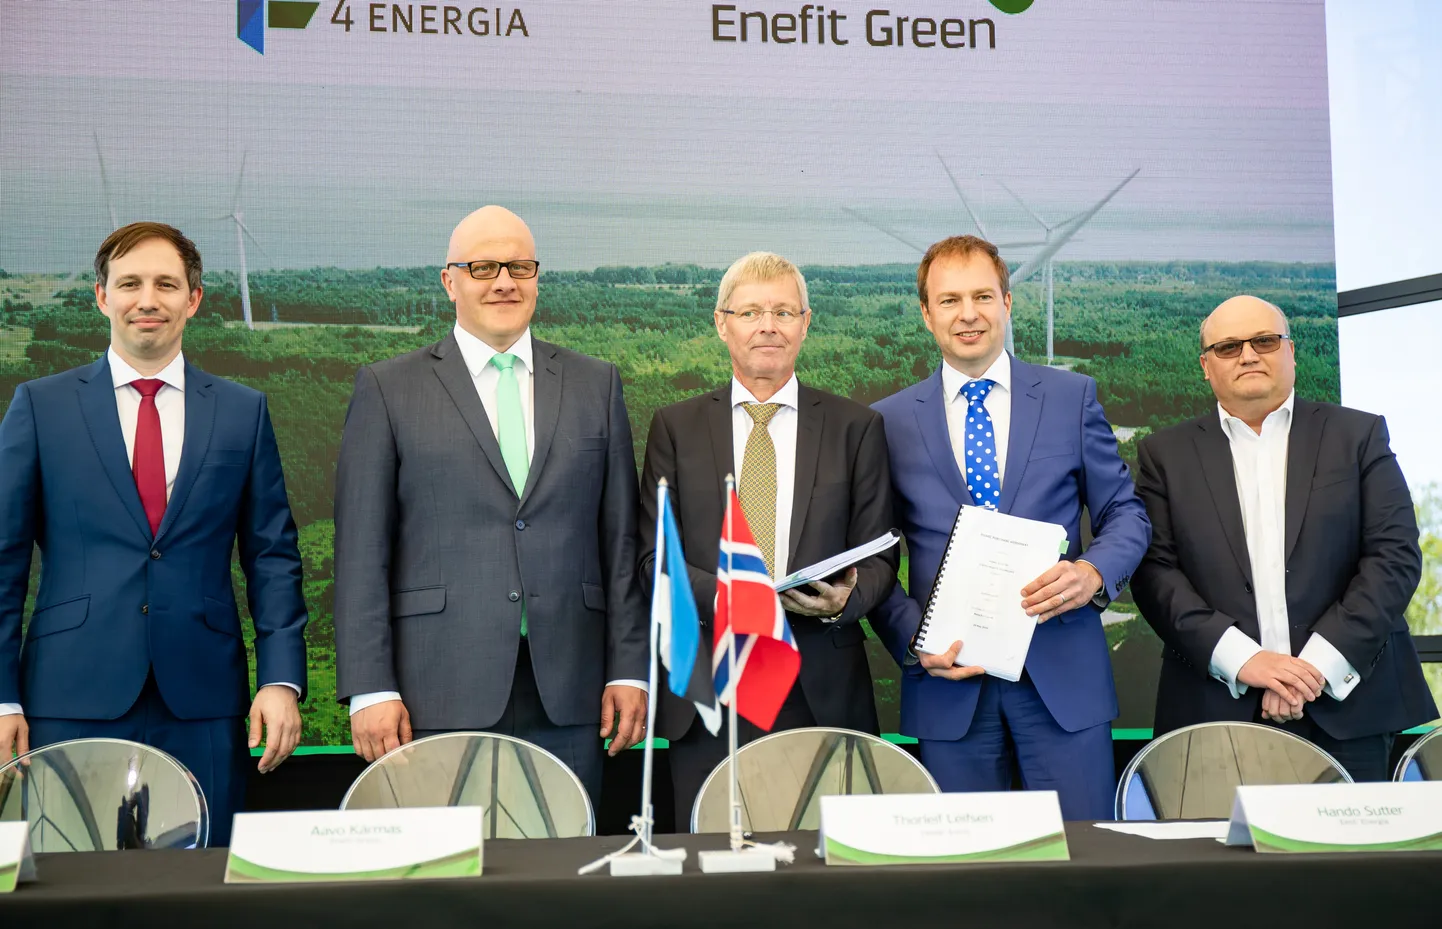 Eesti Energia и Vardar заключили договор о покупке 4Energia со стороны Enefit Green.